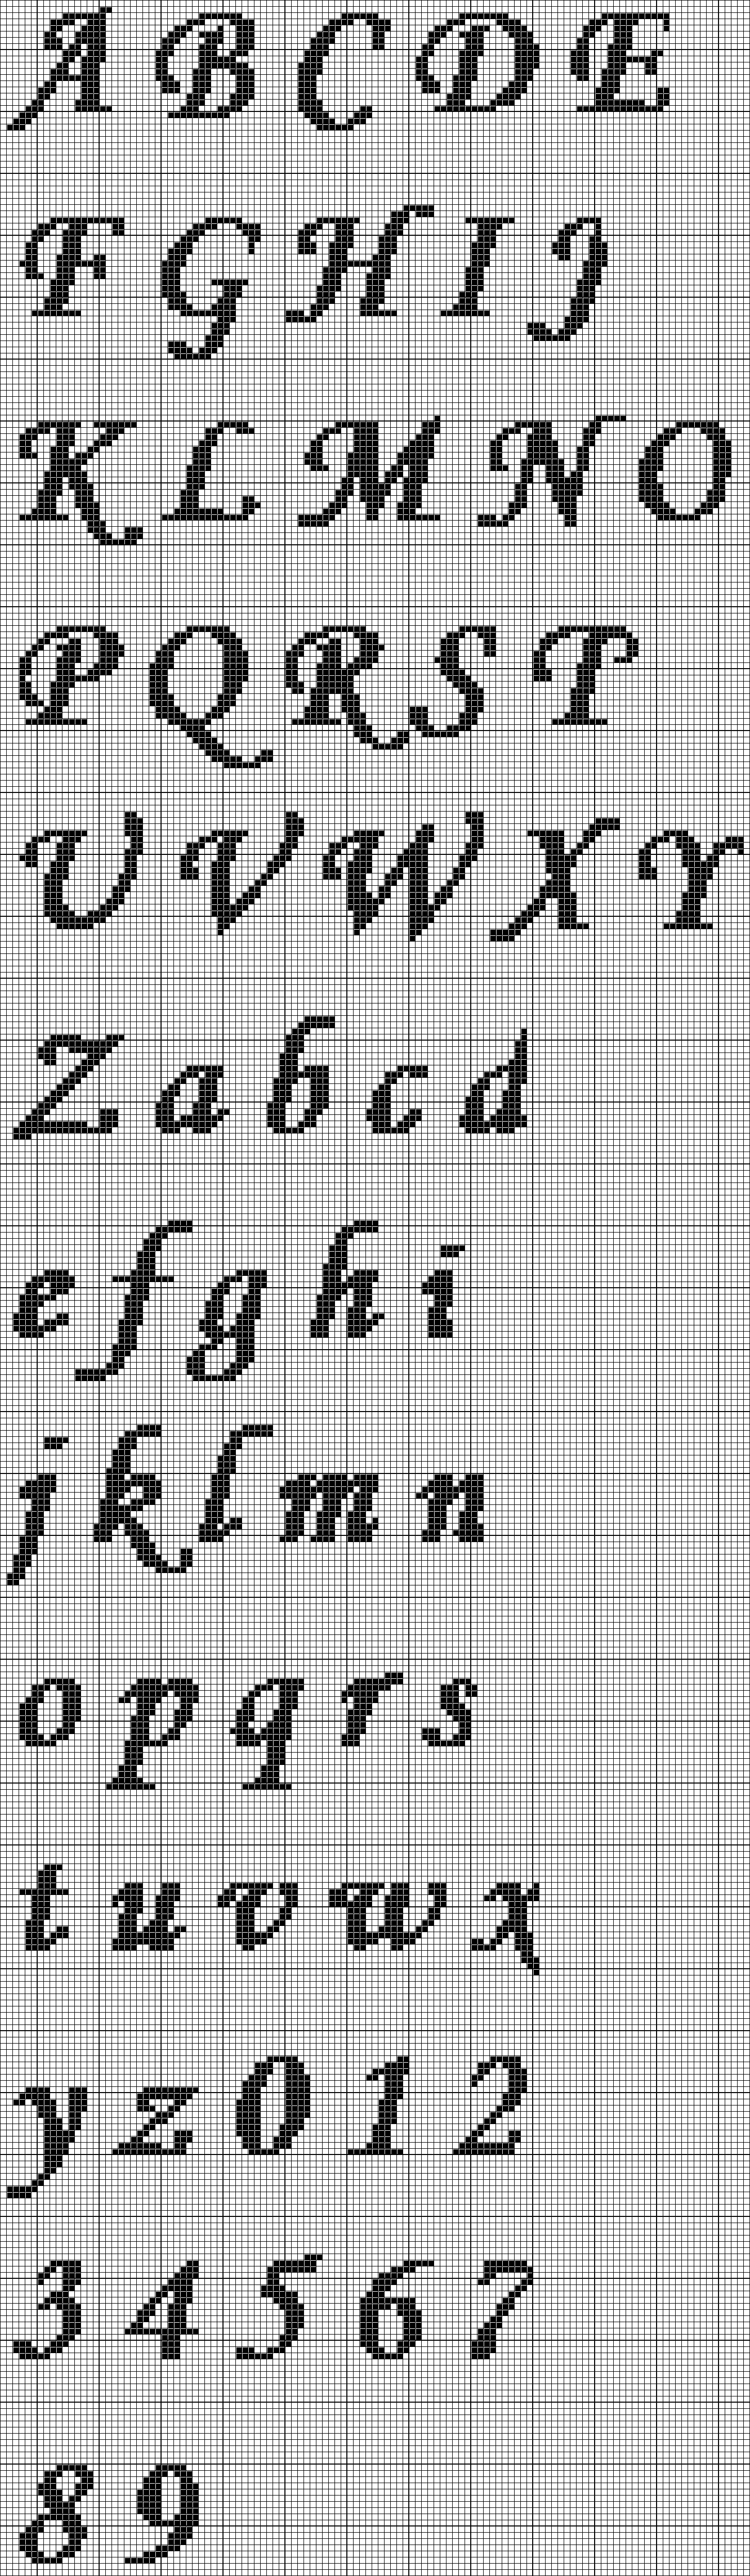 Free Cross Stitch Patterns Alphabet